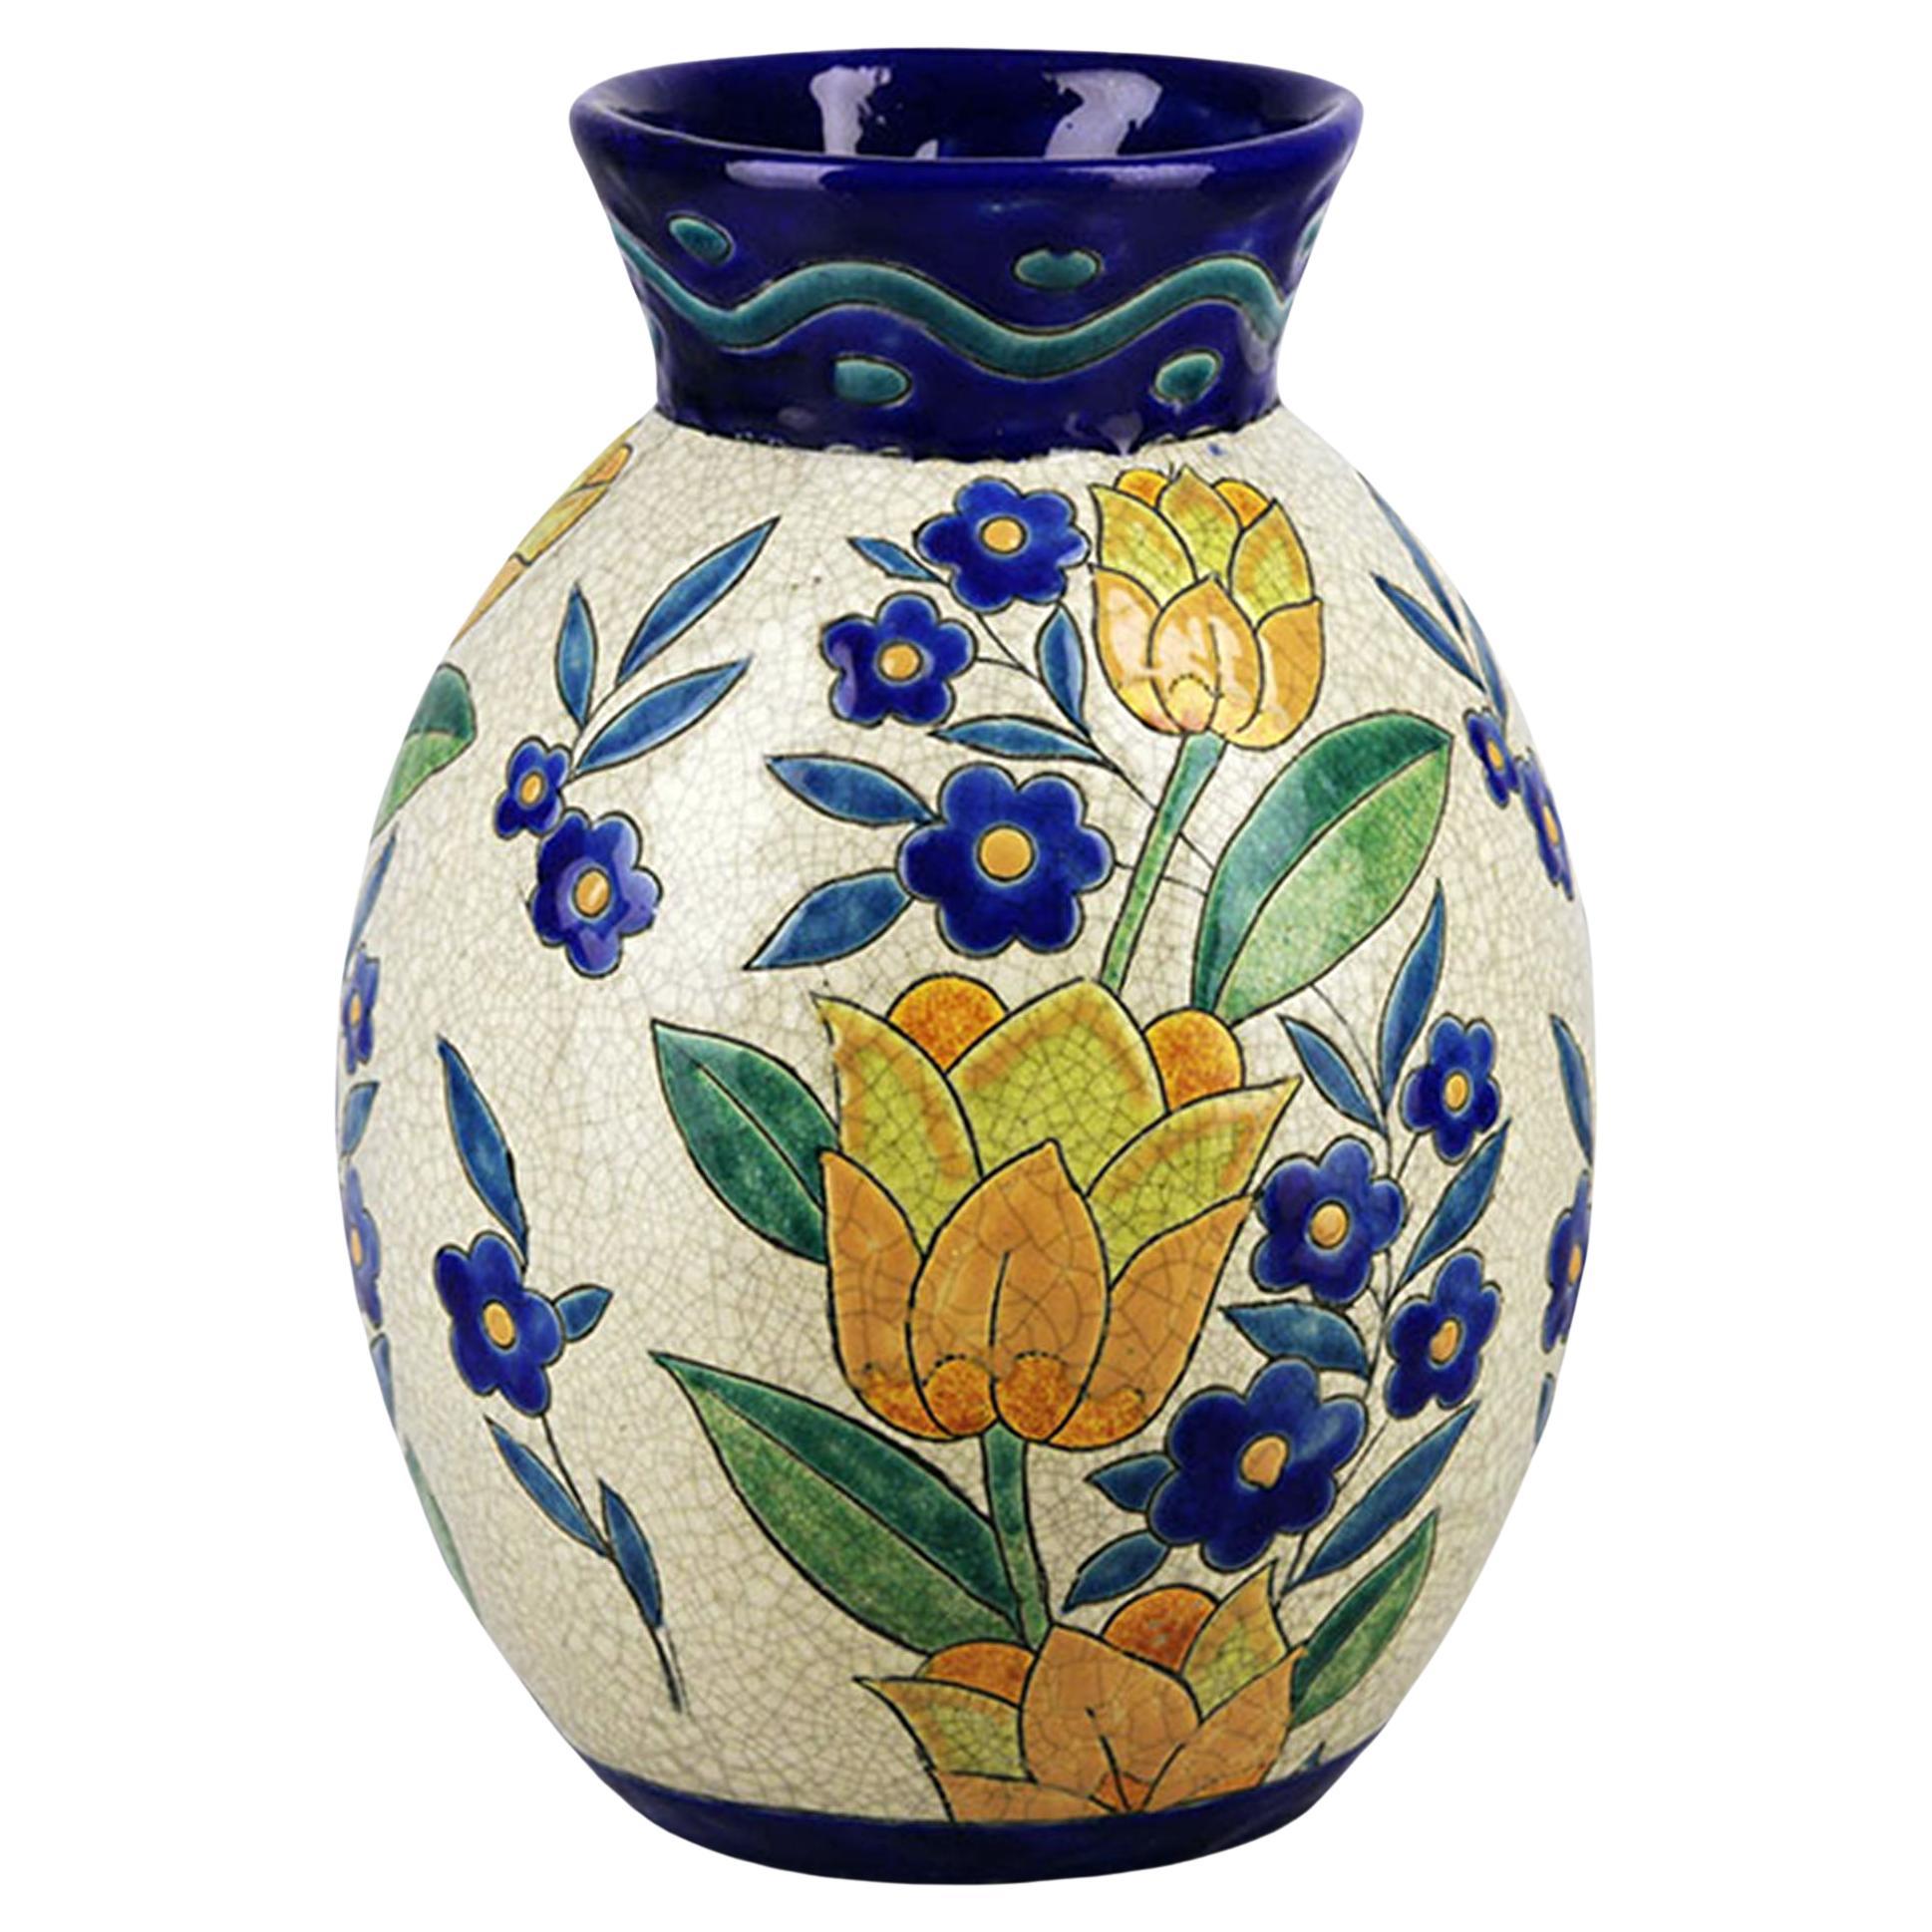 Art Déco Belgian Glazed Pottery/Ceramic Charles Catteau-Like Vase by Boch Freres